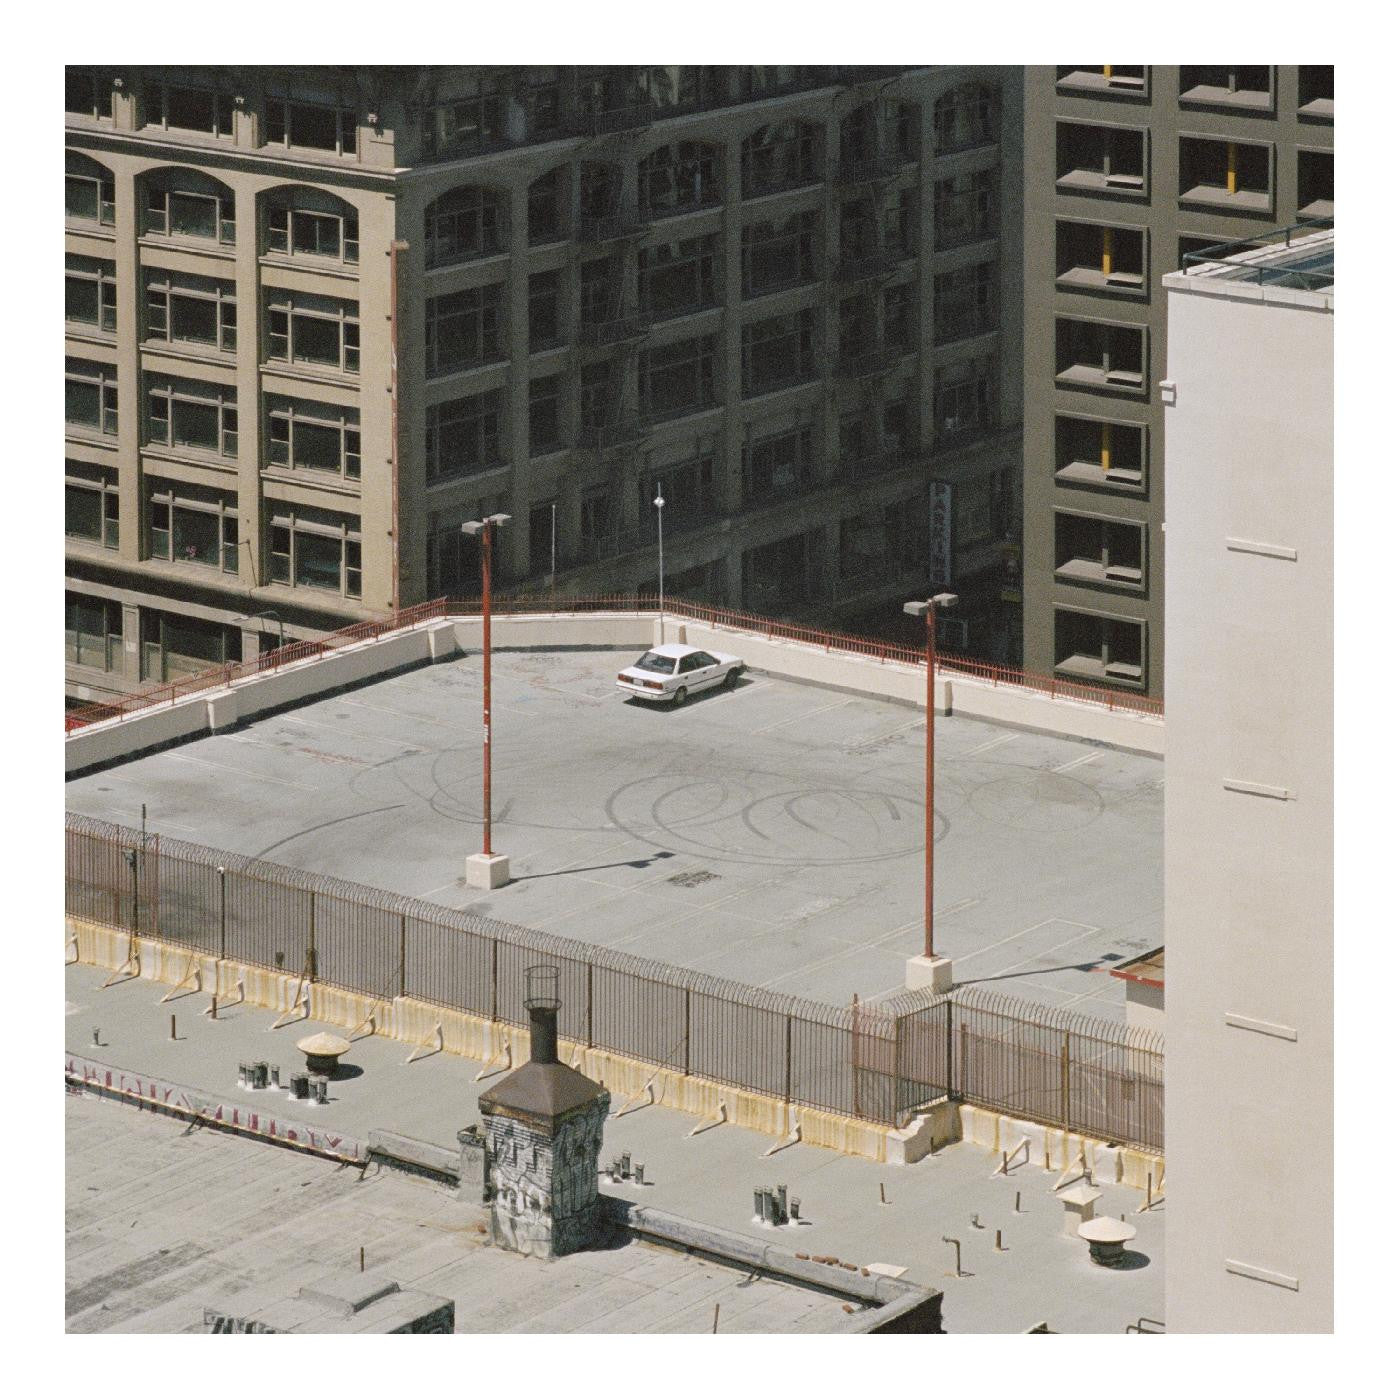 Arctic Monkeys - The Car (Indie Exclusive, Custard Vinyl) (LP) - Joco Records